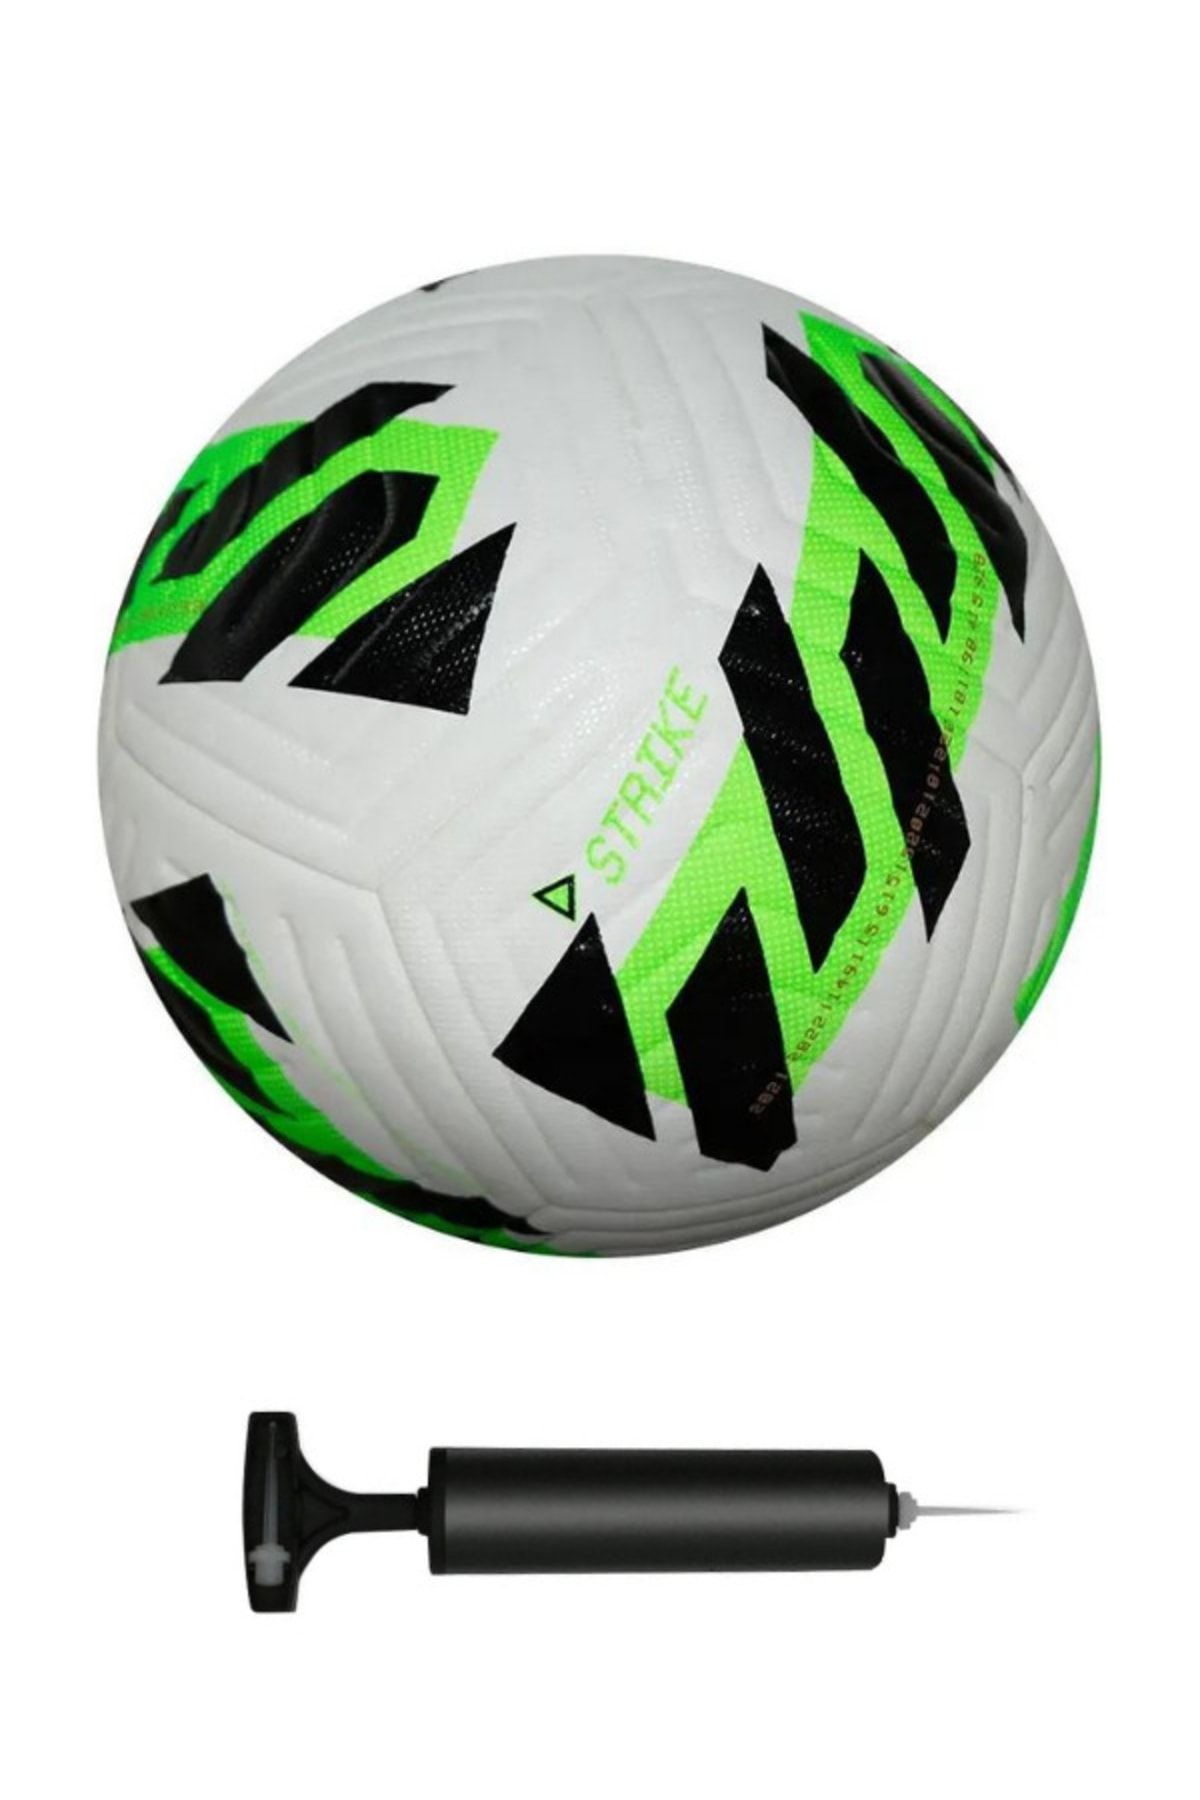 Janissary Extra Dayanıklı Profesyonel Futbol Topu, 5 Numara, Halı Saha Topu, Maç Topu + Pompa